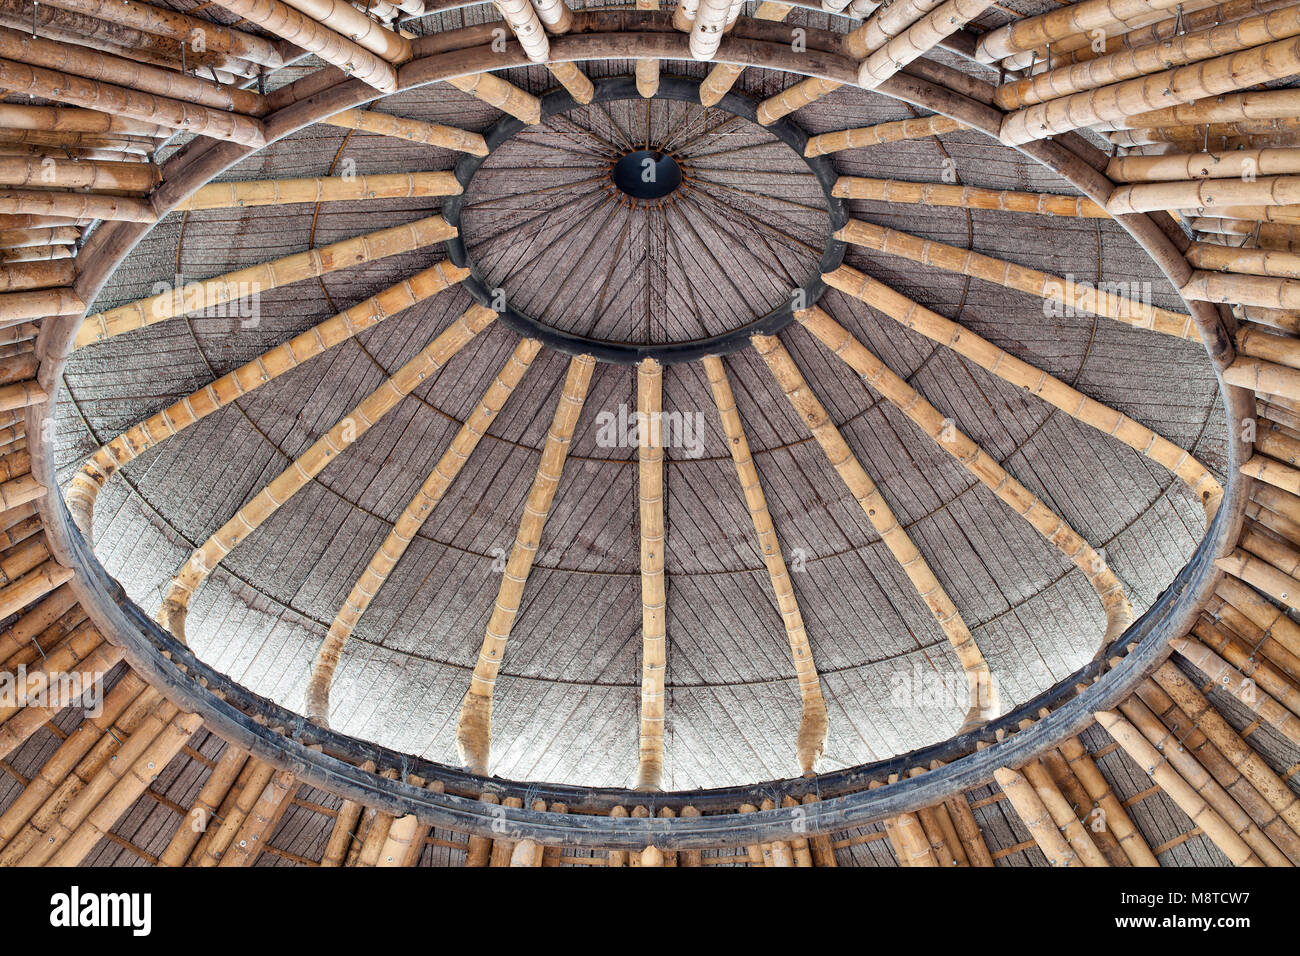 Centre of dome showing bamboo structure and ventilation gap. La Cúpula, Bogota, Colombia. Architect: Simón Vélez, 2012. Stock Photo